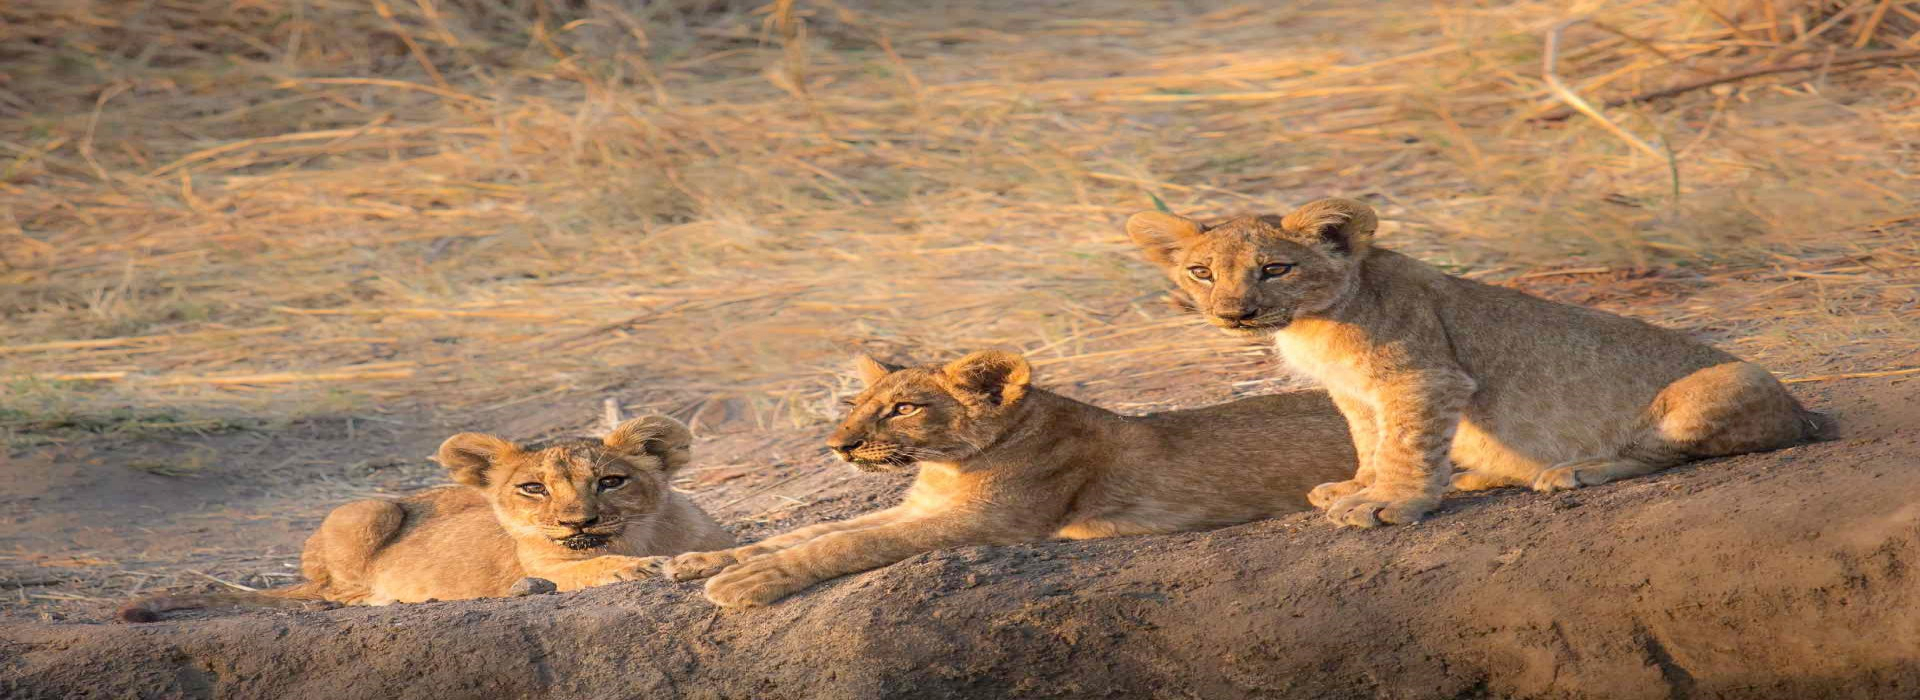 Background Image for Serengeti National Park